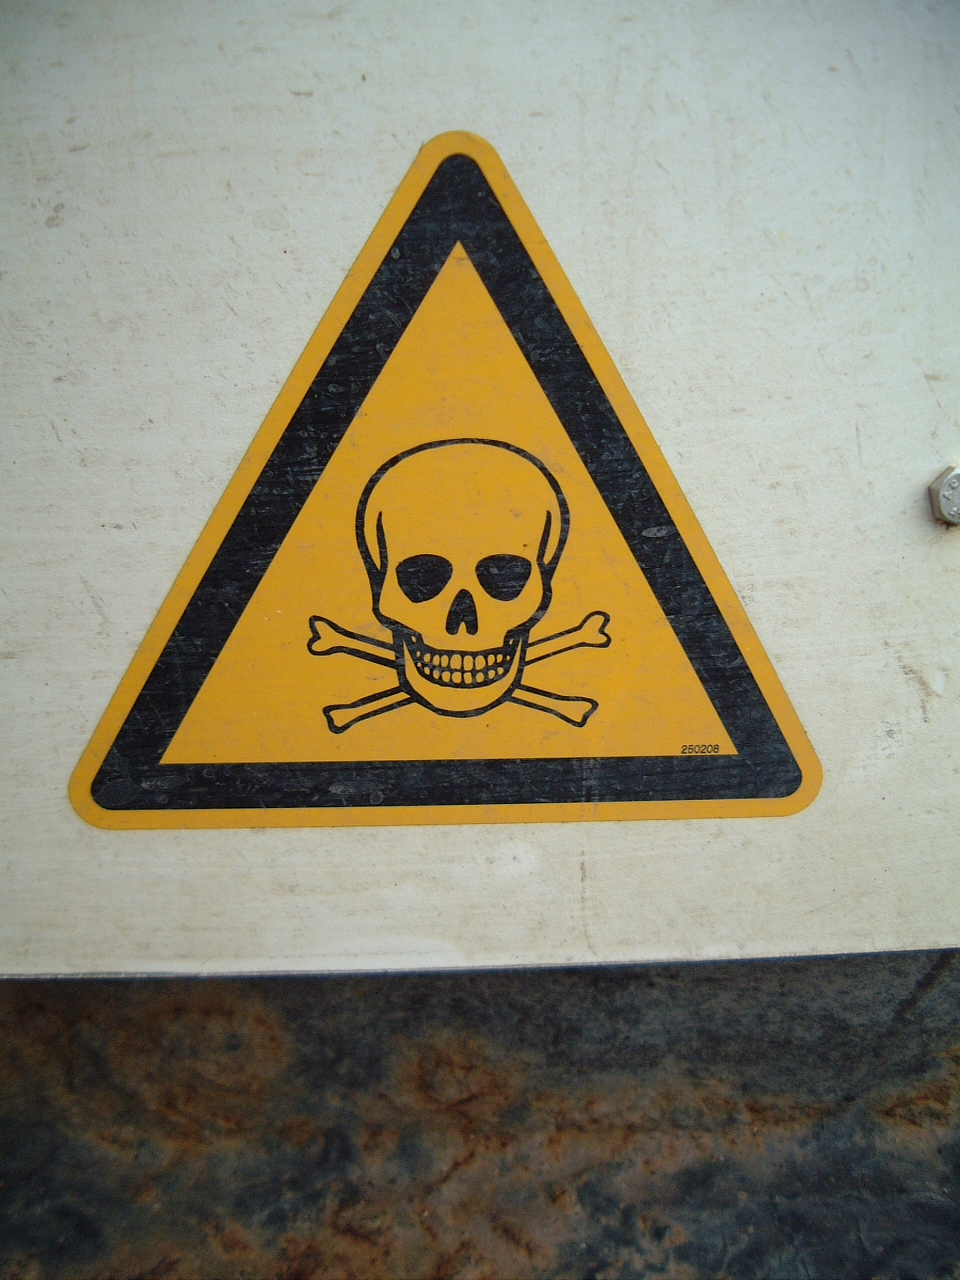 maartent sign warning skull and crossbones yellow triangle danger